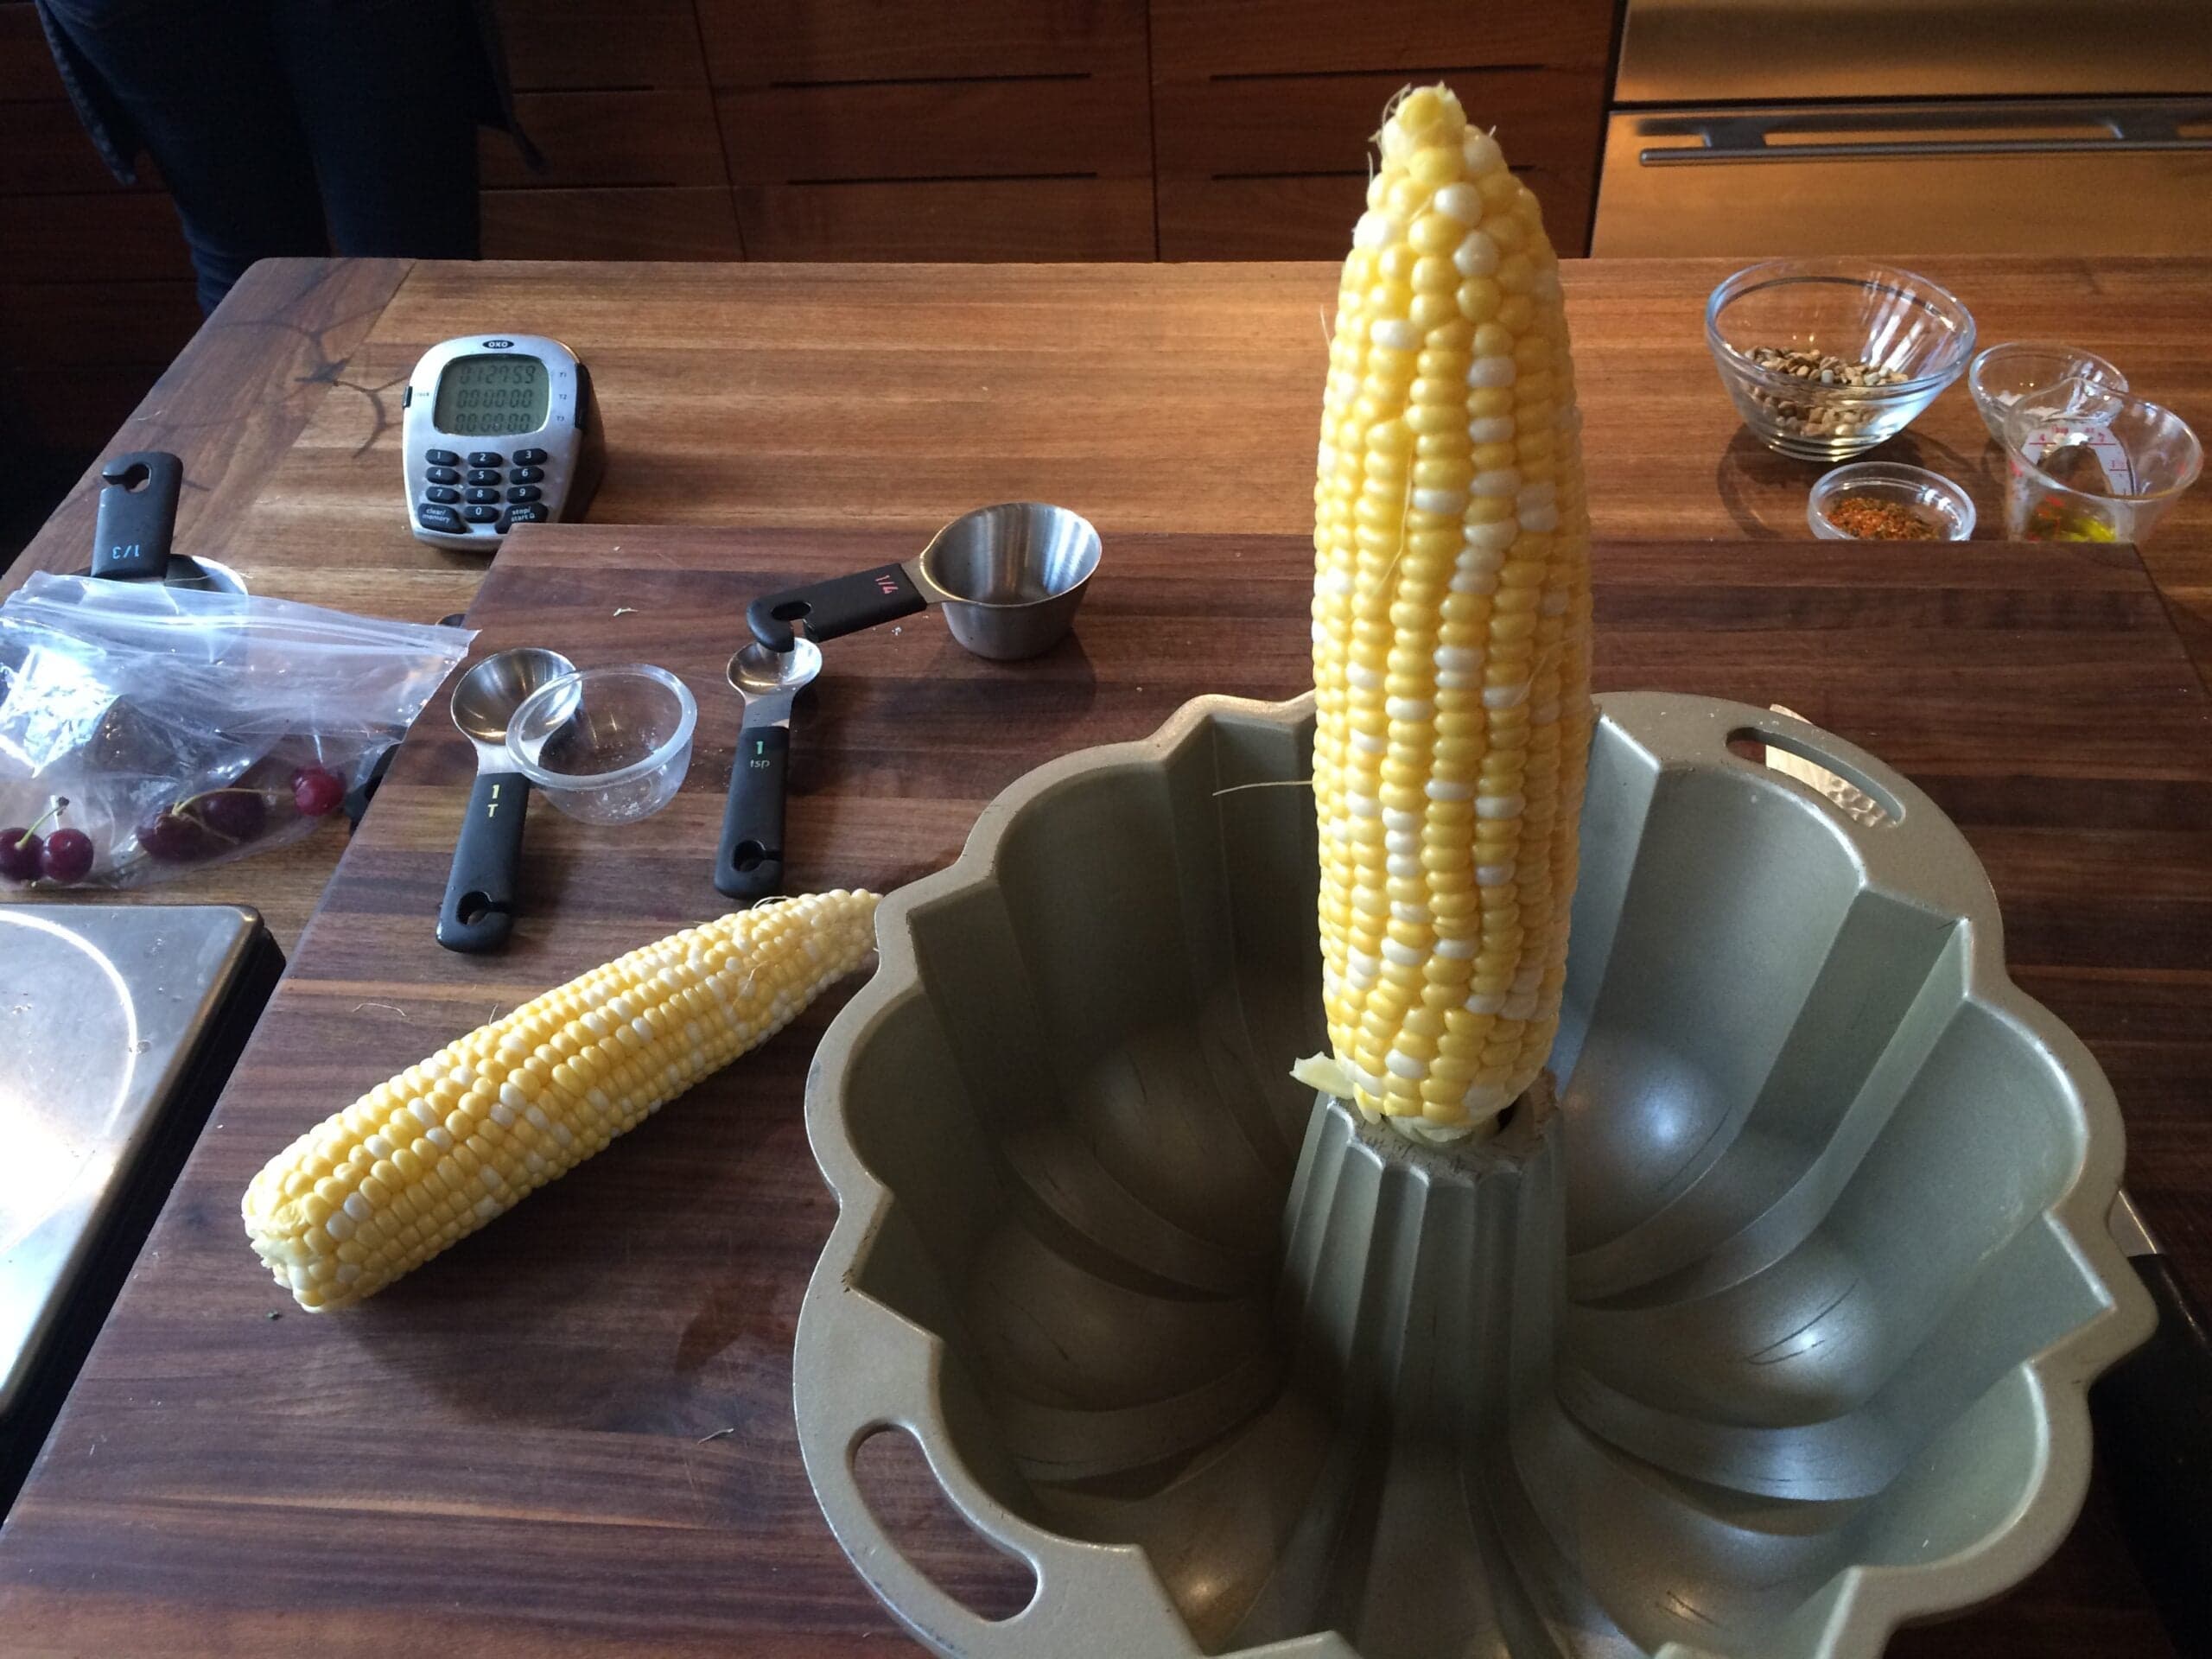 Cutting Corn Off the Cob